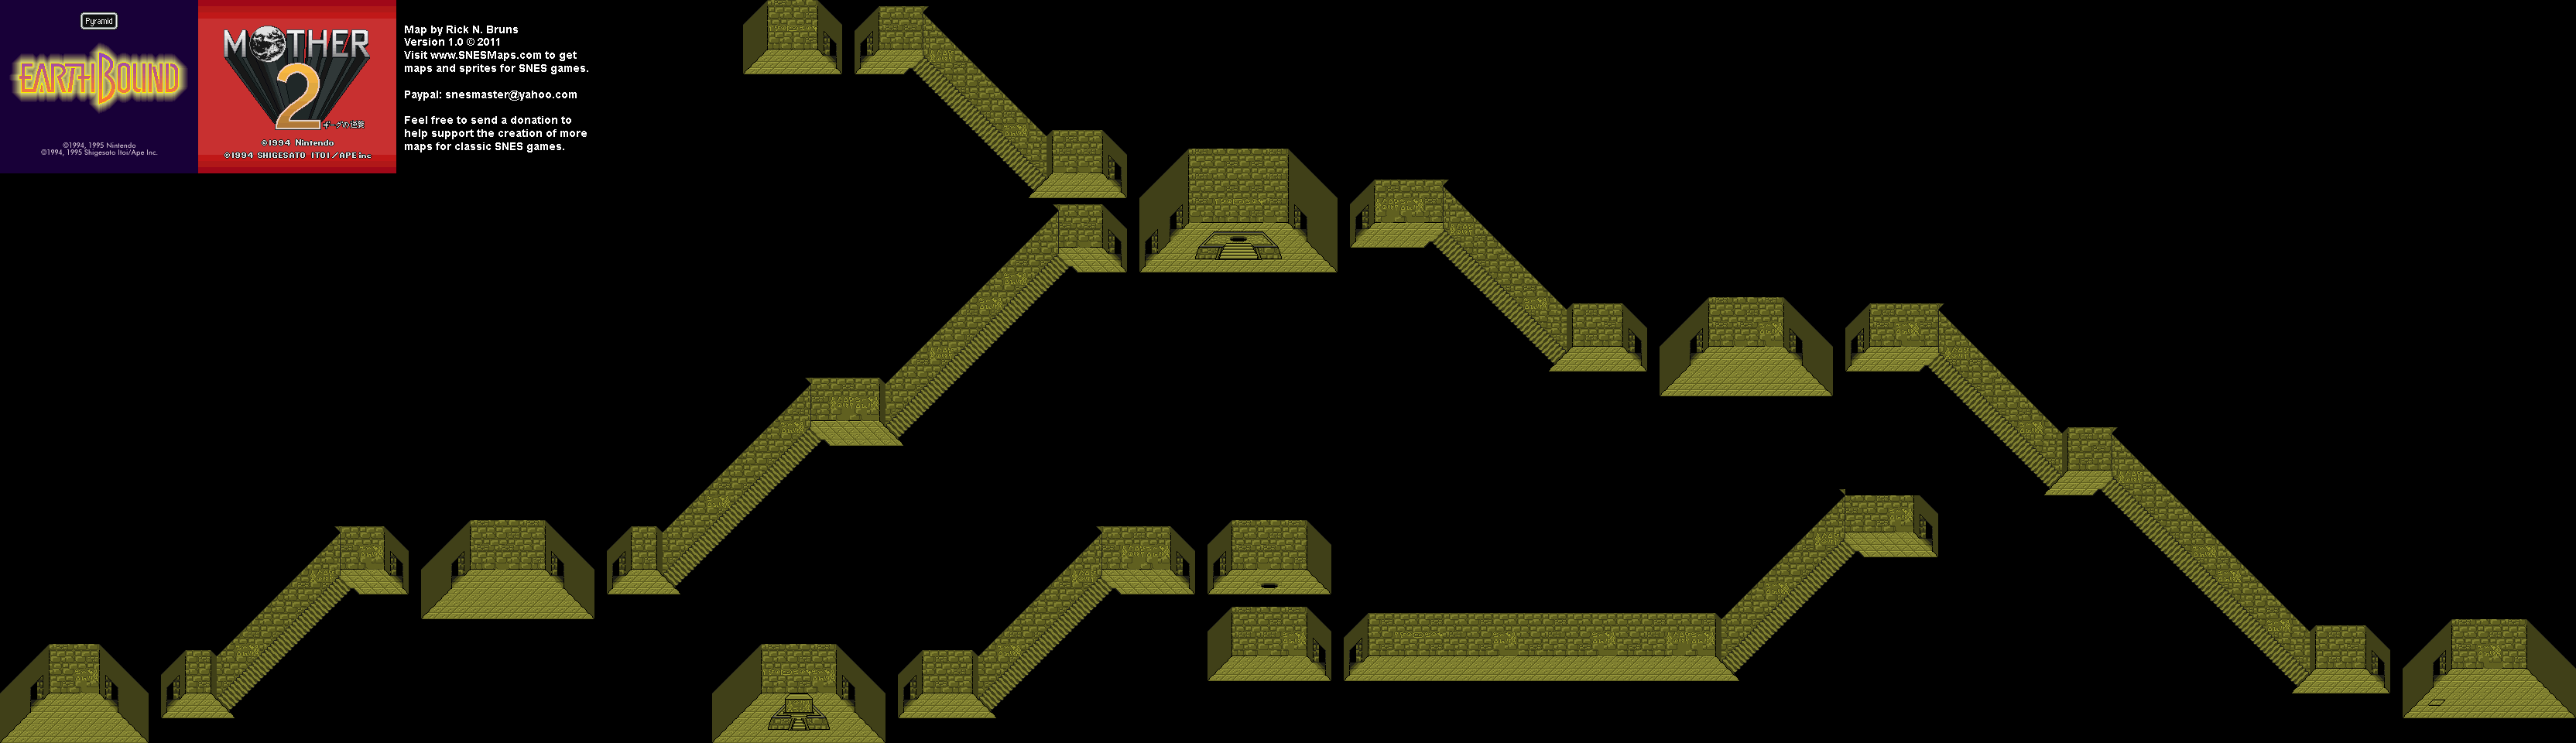 EarthBound (Mother 2) - Pyramid Super Nintendo SNES Map BG